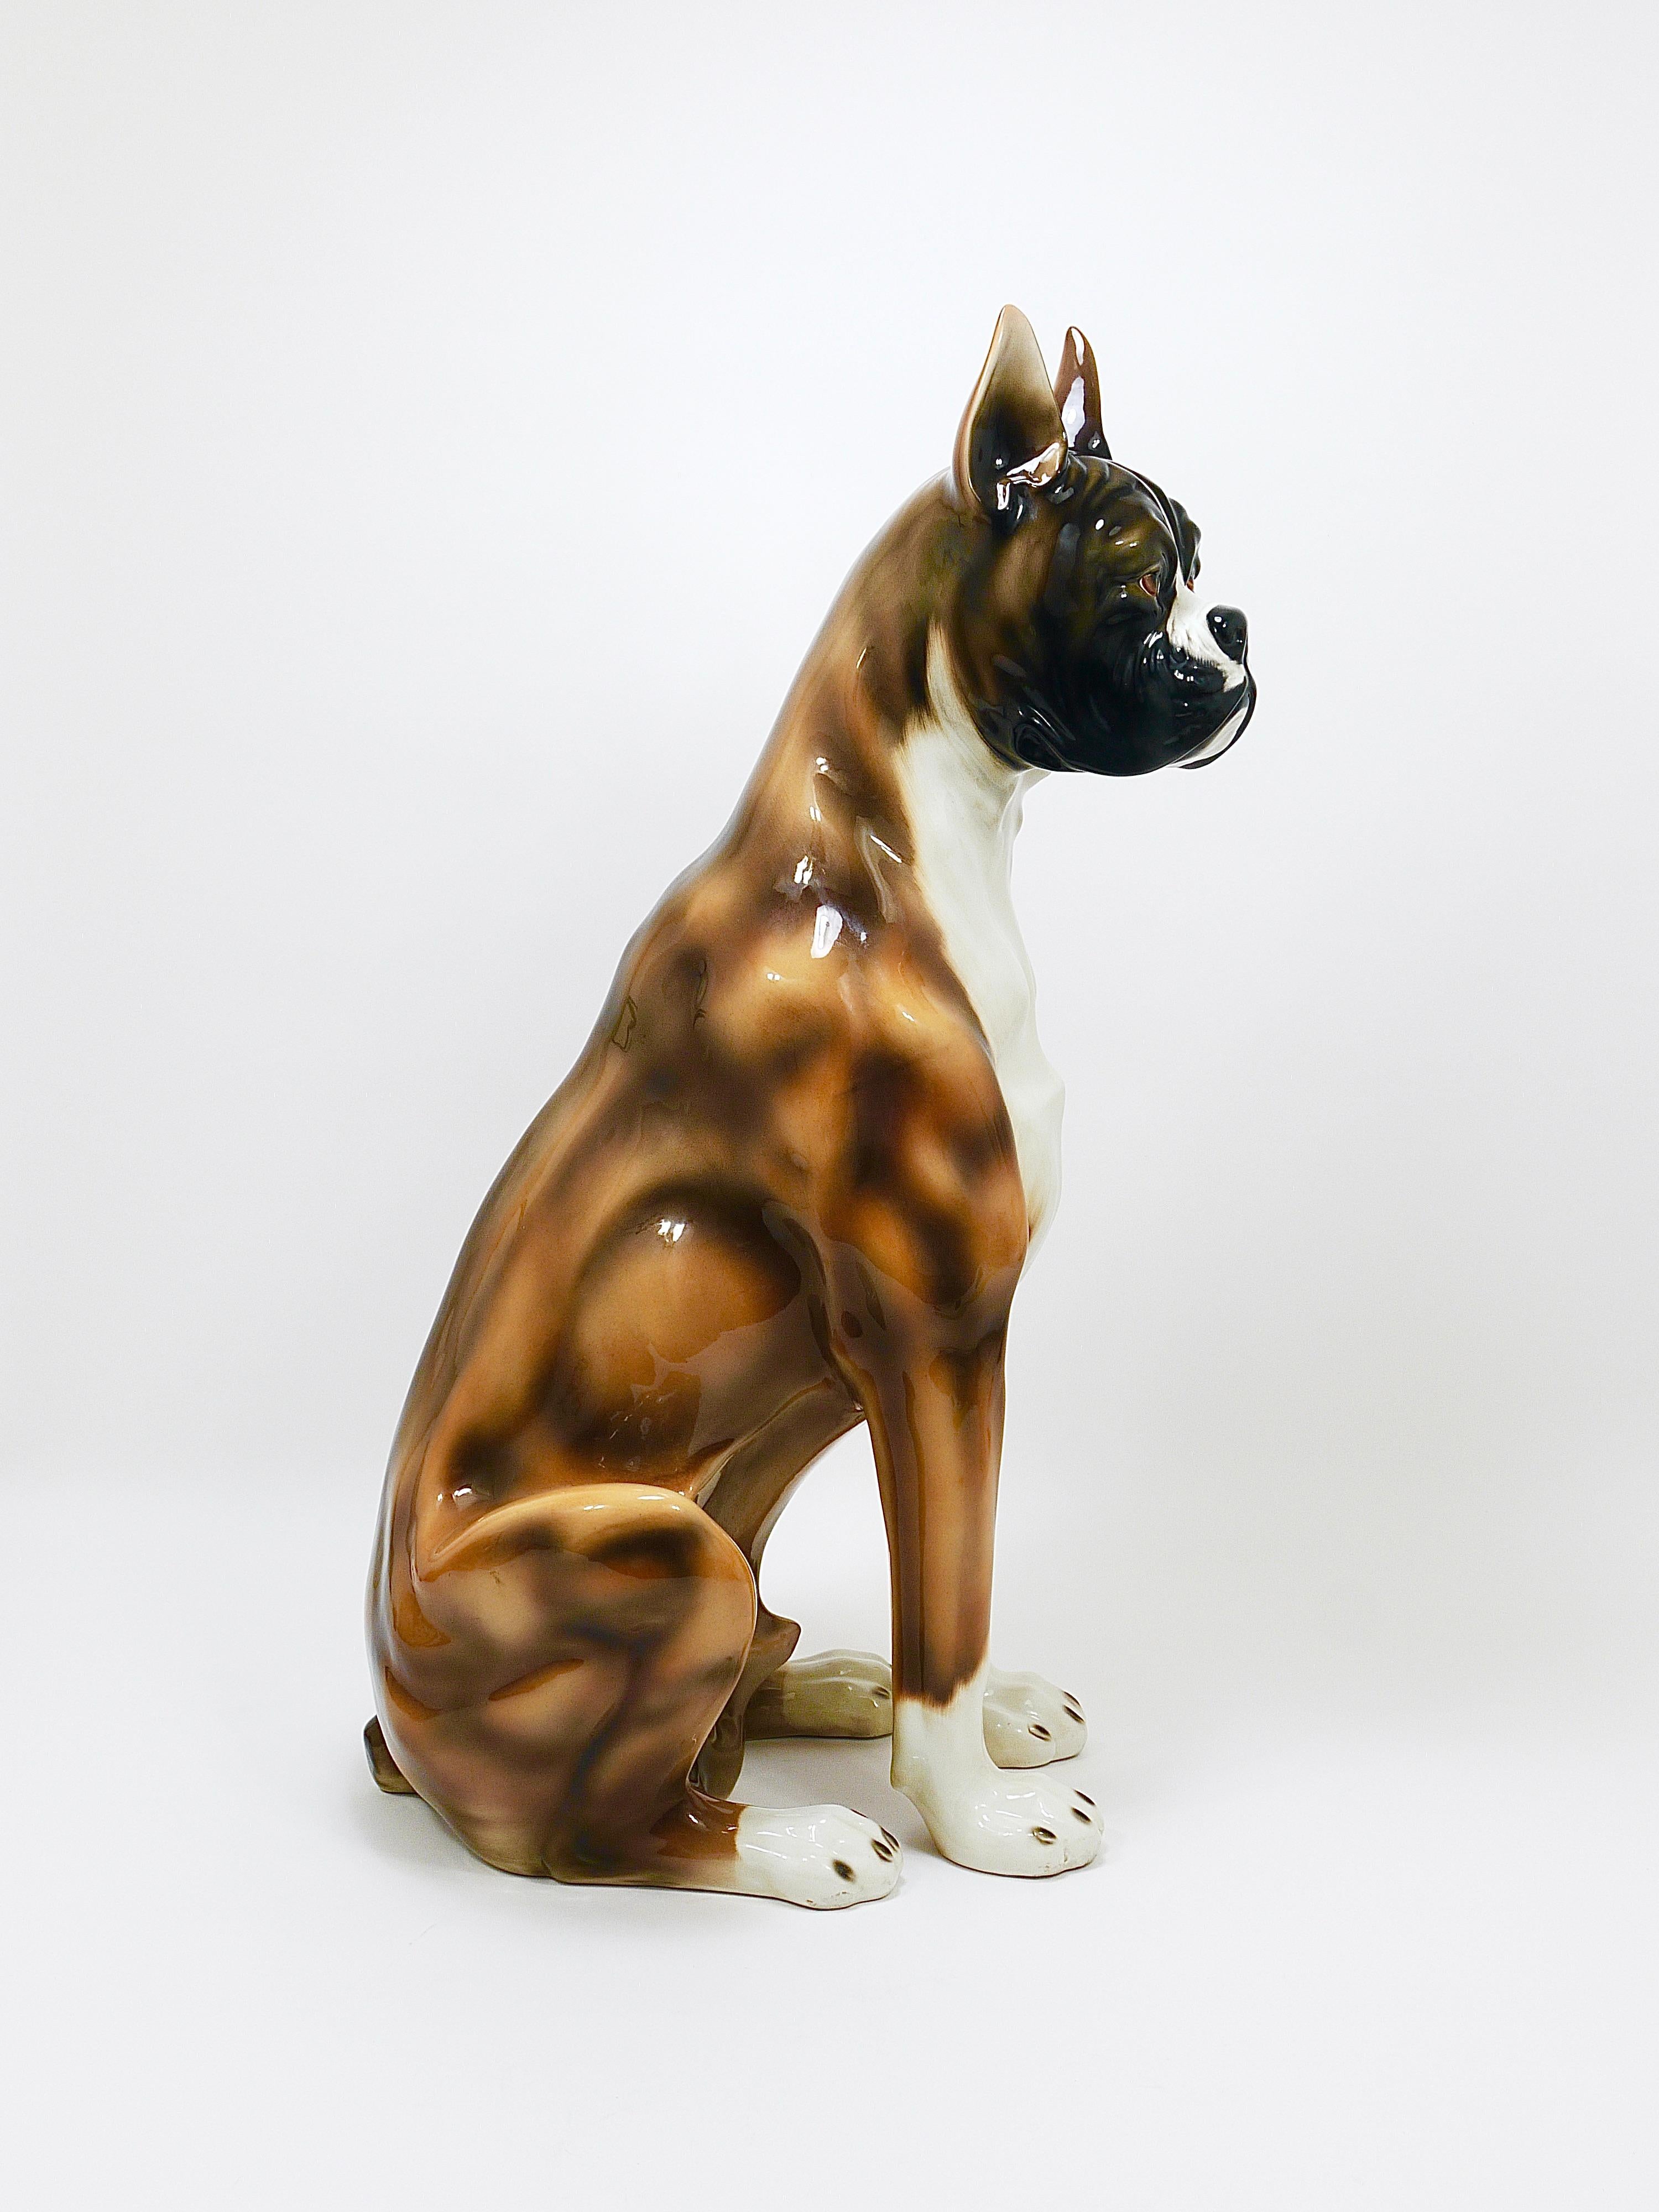 Boxer Dog Life-Size Majolica Statue Sculpture, Glazed Ceramic, Italy, 1970s For Sale 2